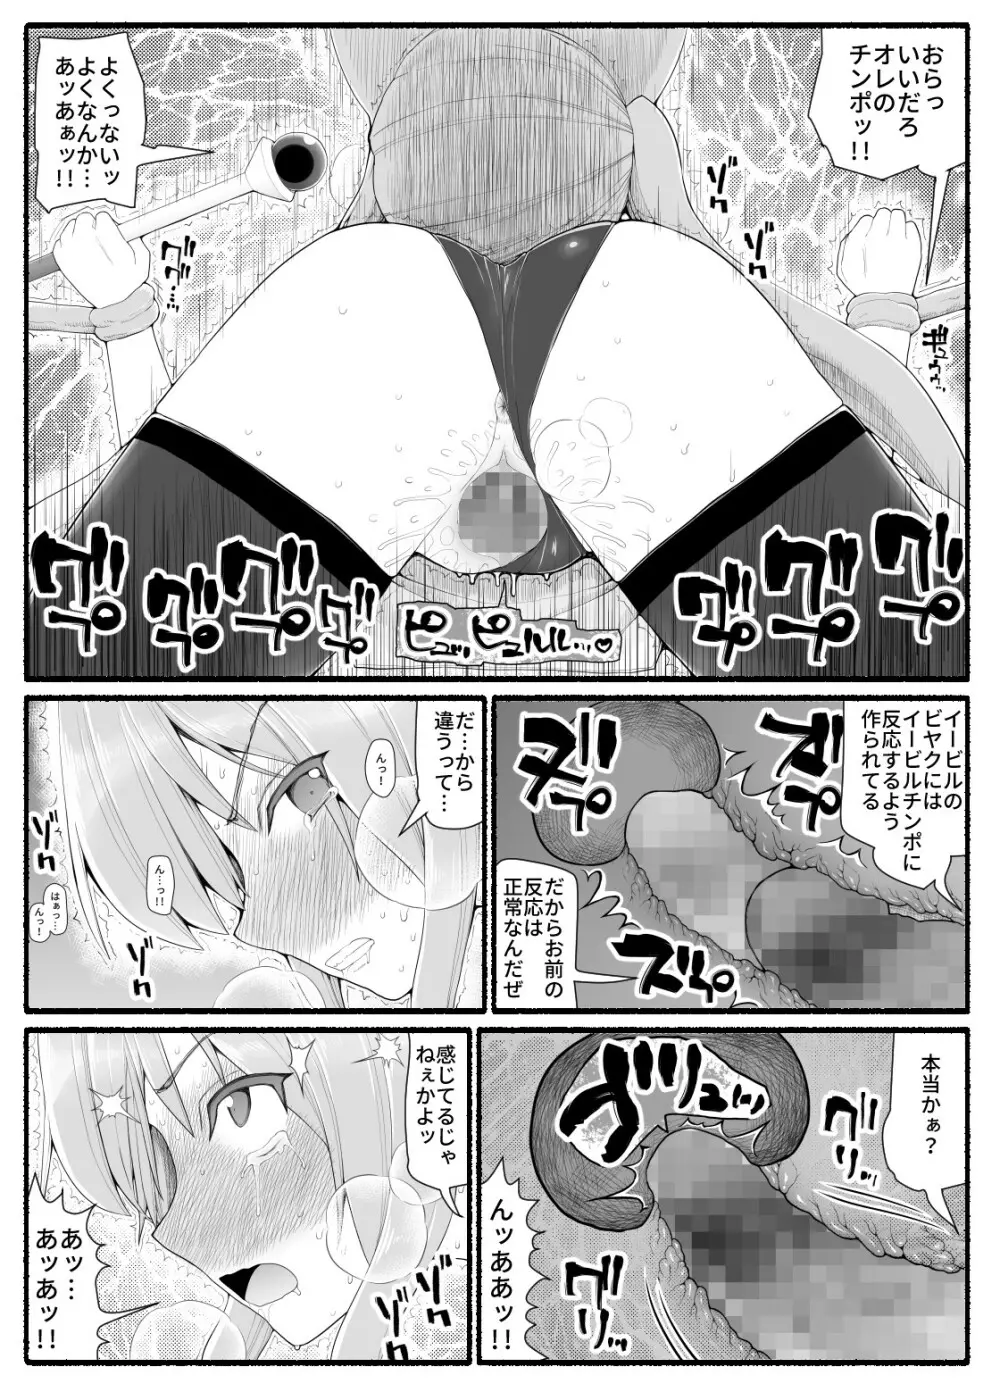 魔法少女vs淫魔生物 13 17ページ